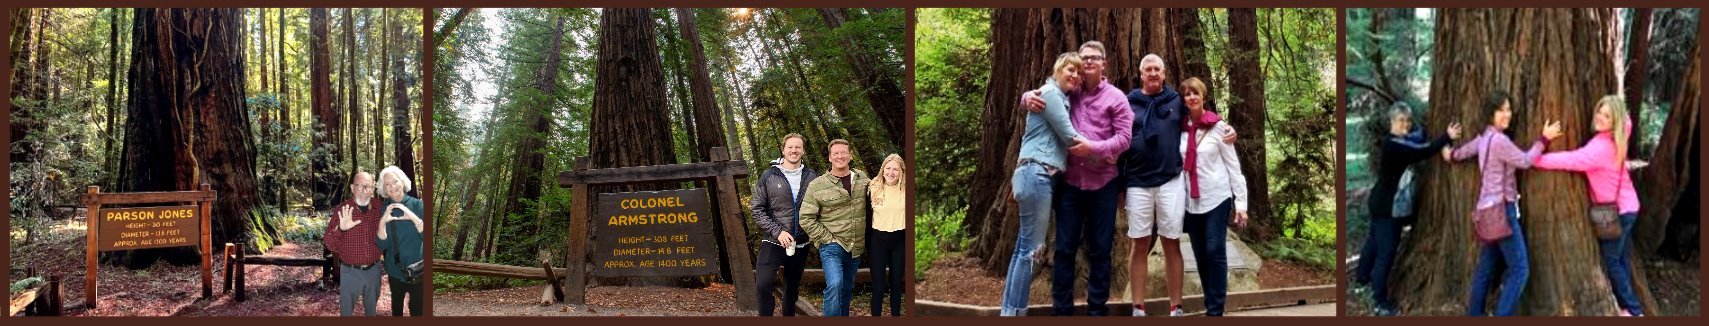 redwood-forest-gaint-trees-sequoias-california